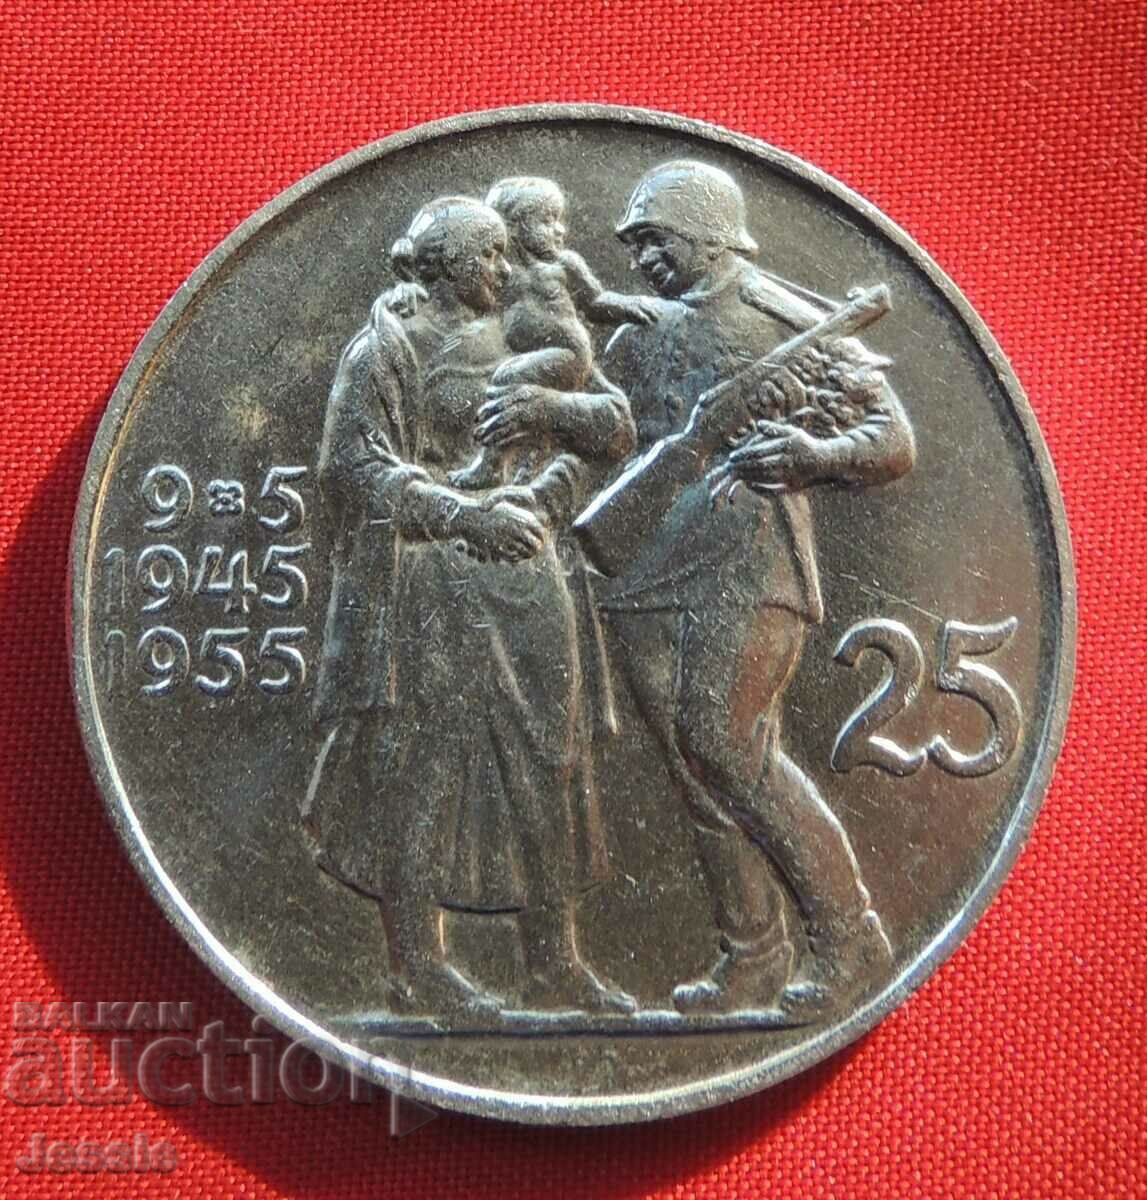 25 kroner 1955 Czechoslovakia